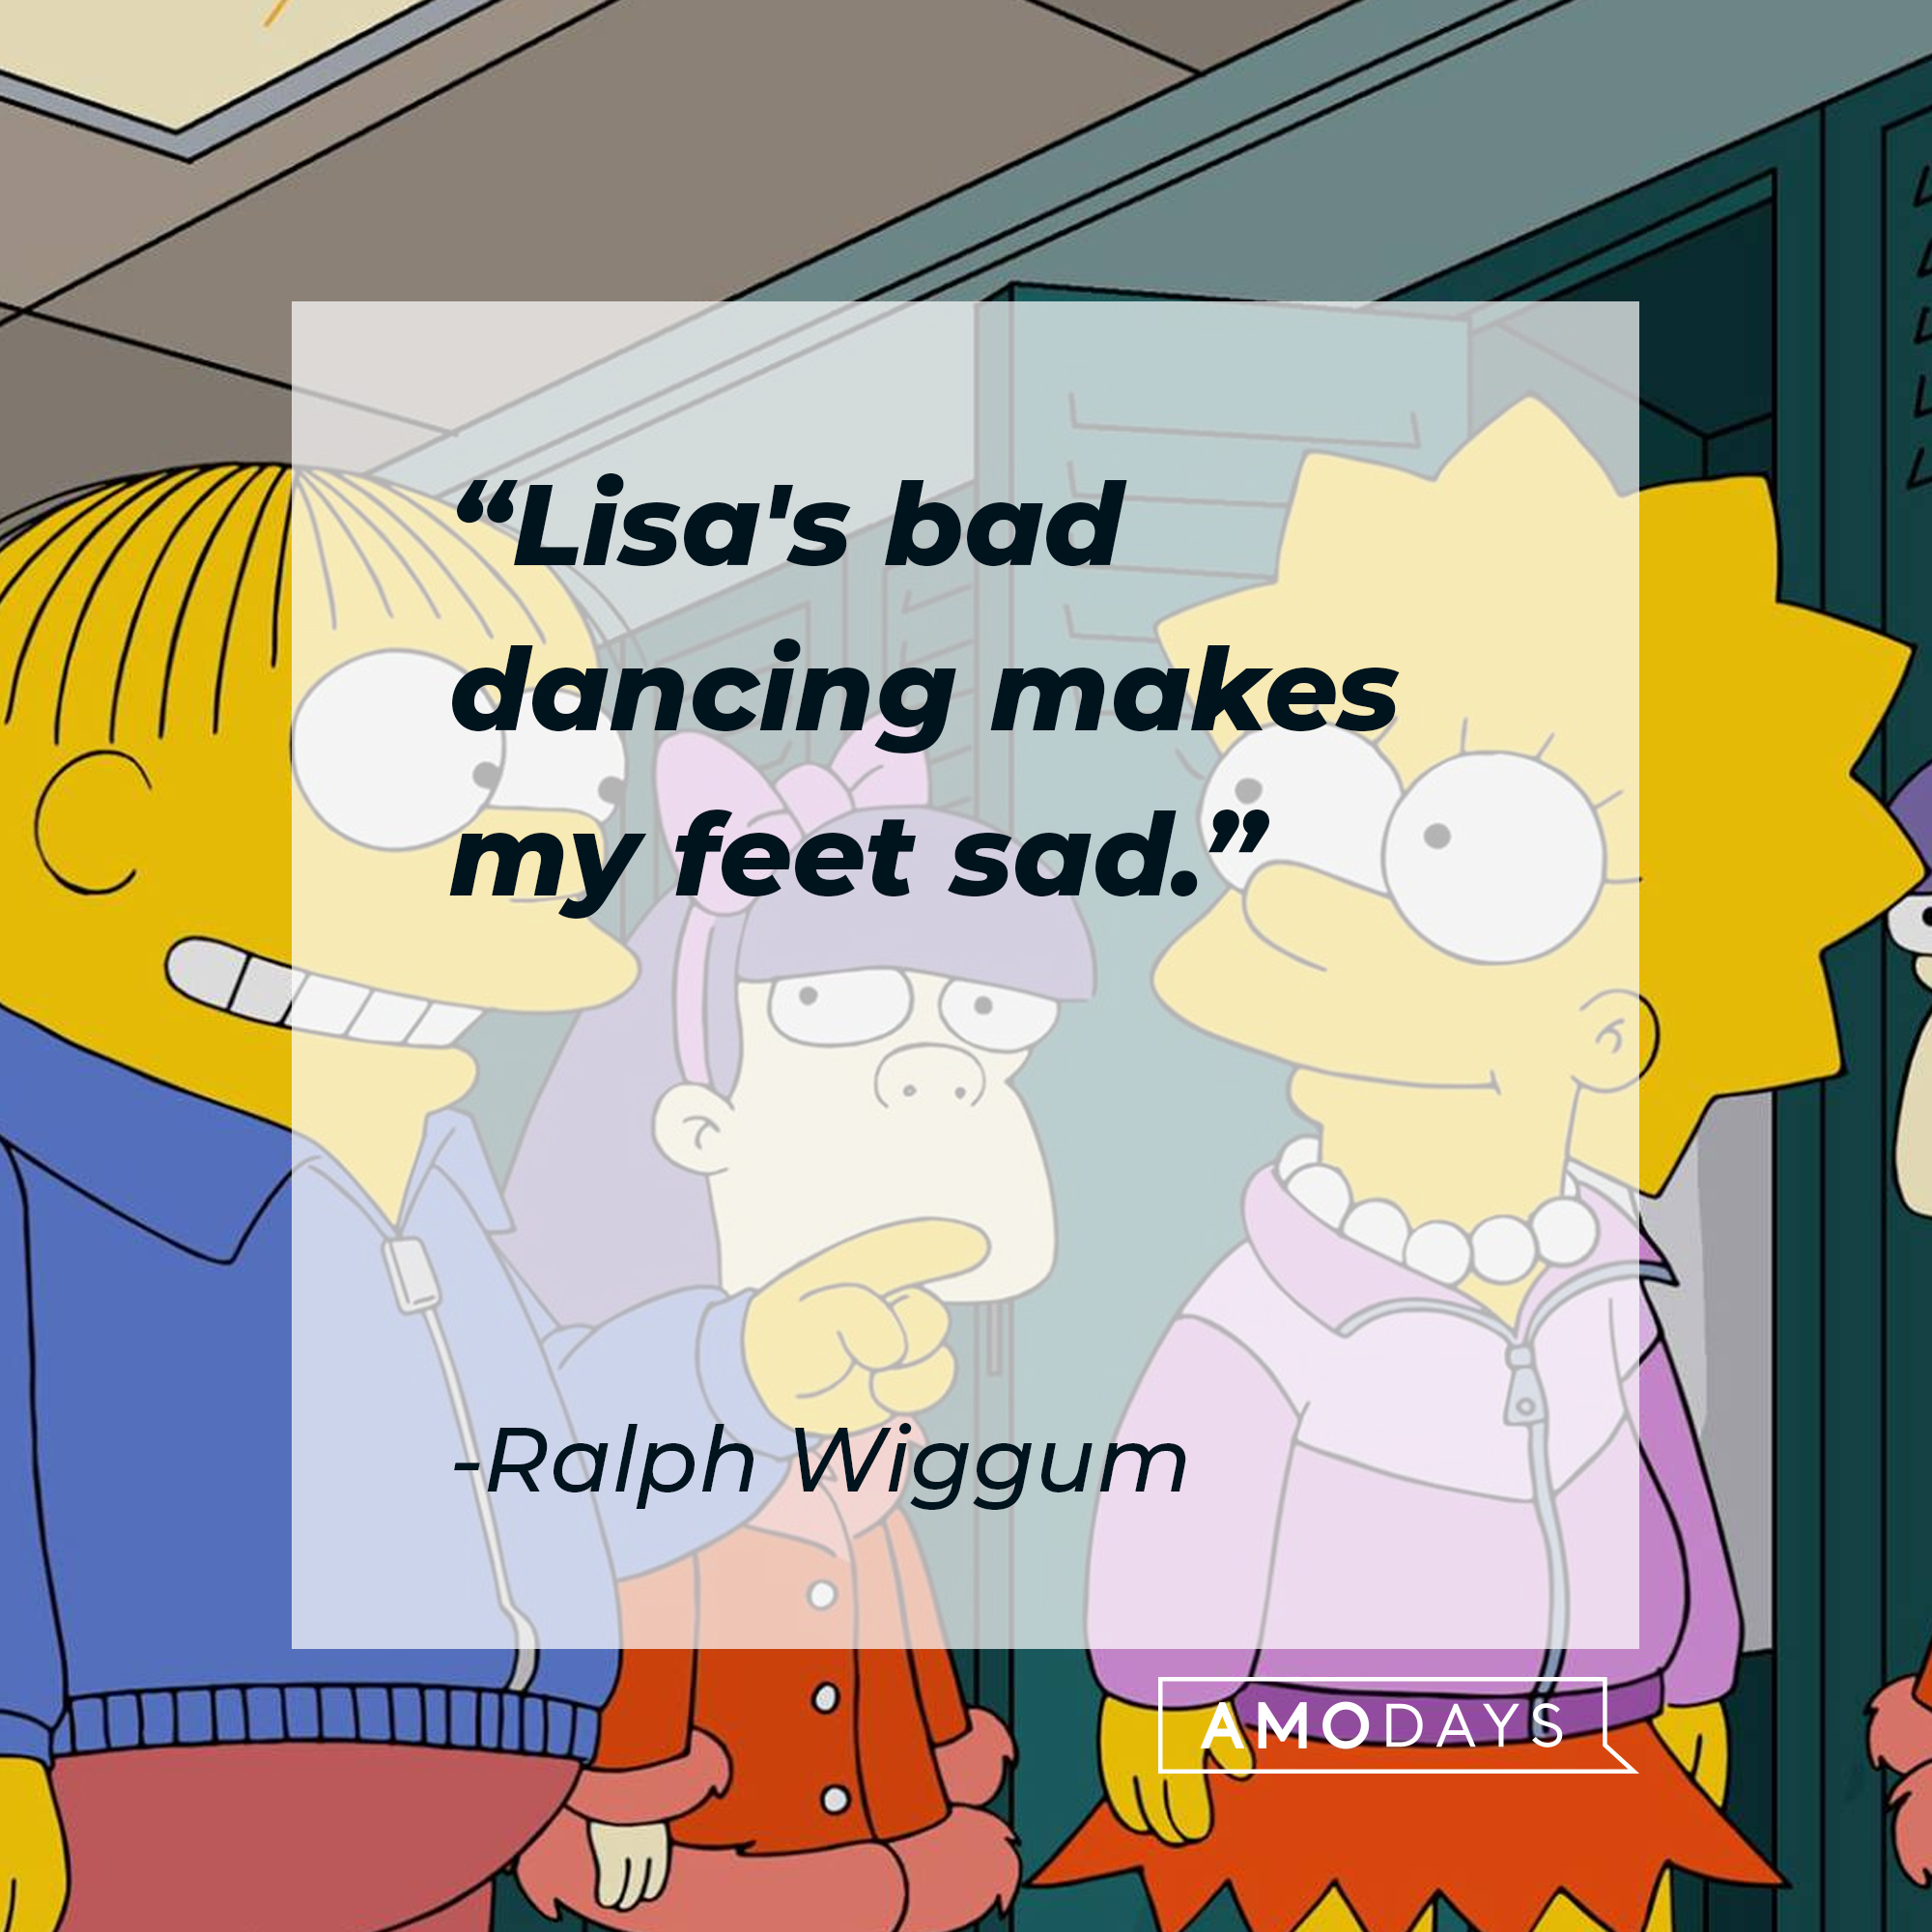 Ralph Wiggum's quote: "Lisa's bad dancing makes my feet sad." | Source: facebook.com/TheSimpsons